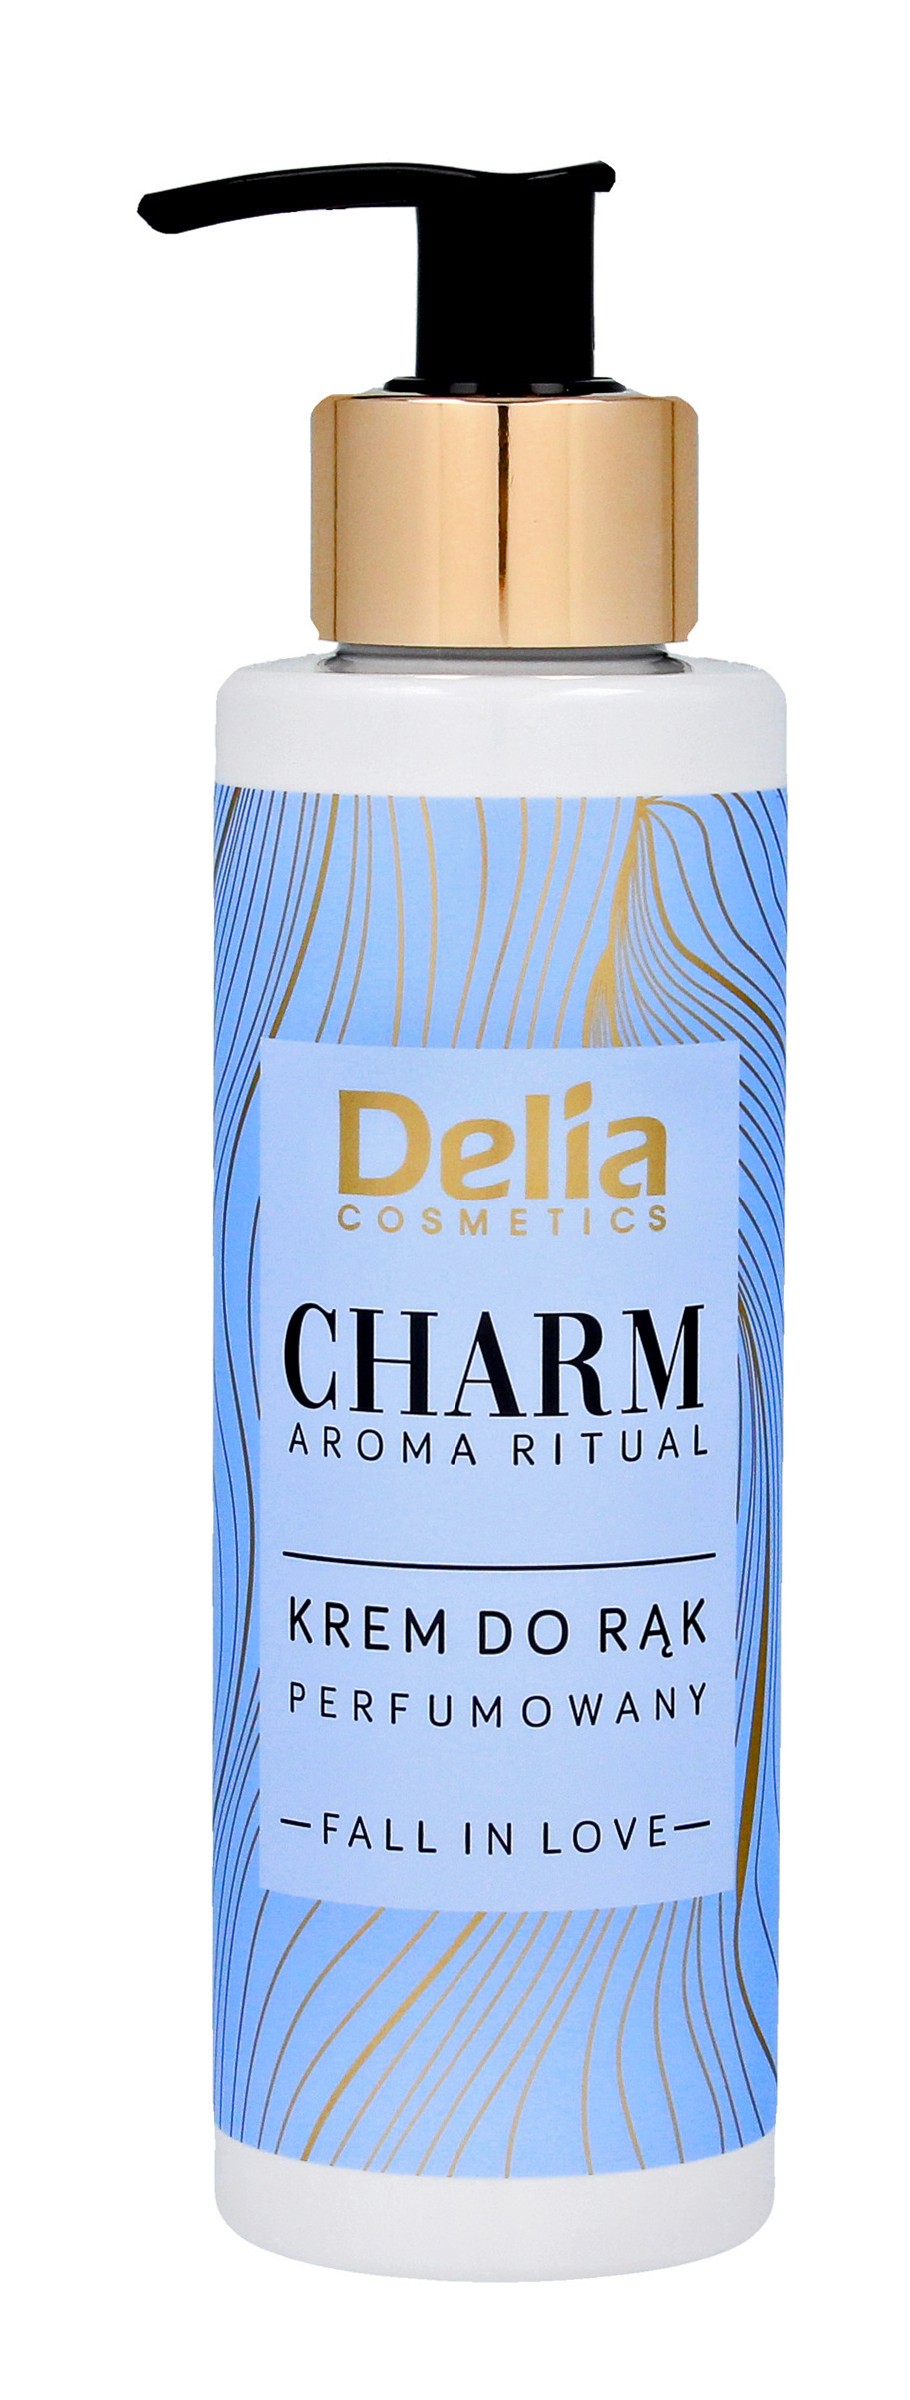 Delia Cosmetics Charm Aroma Ritual Krem do rąk perfumowany - Fall in Love  200ml